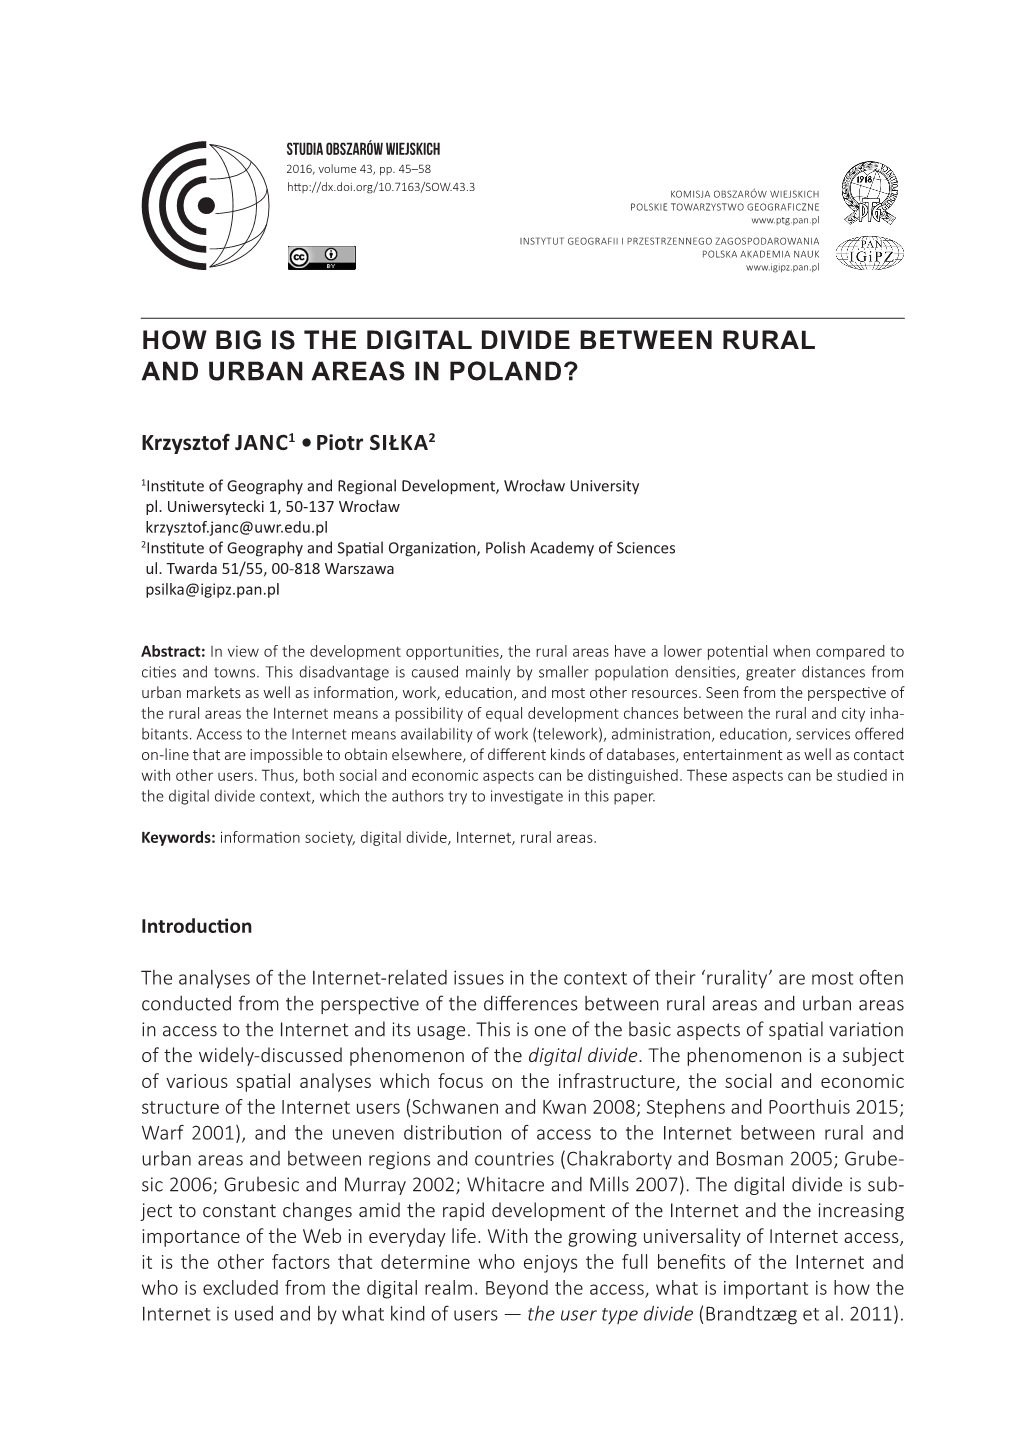 Studia Obszarów Wiejskich, T. 43, How Big Is the Digital Divide Between